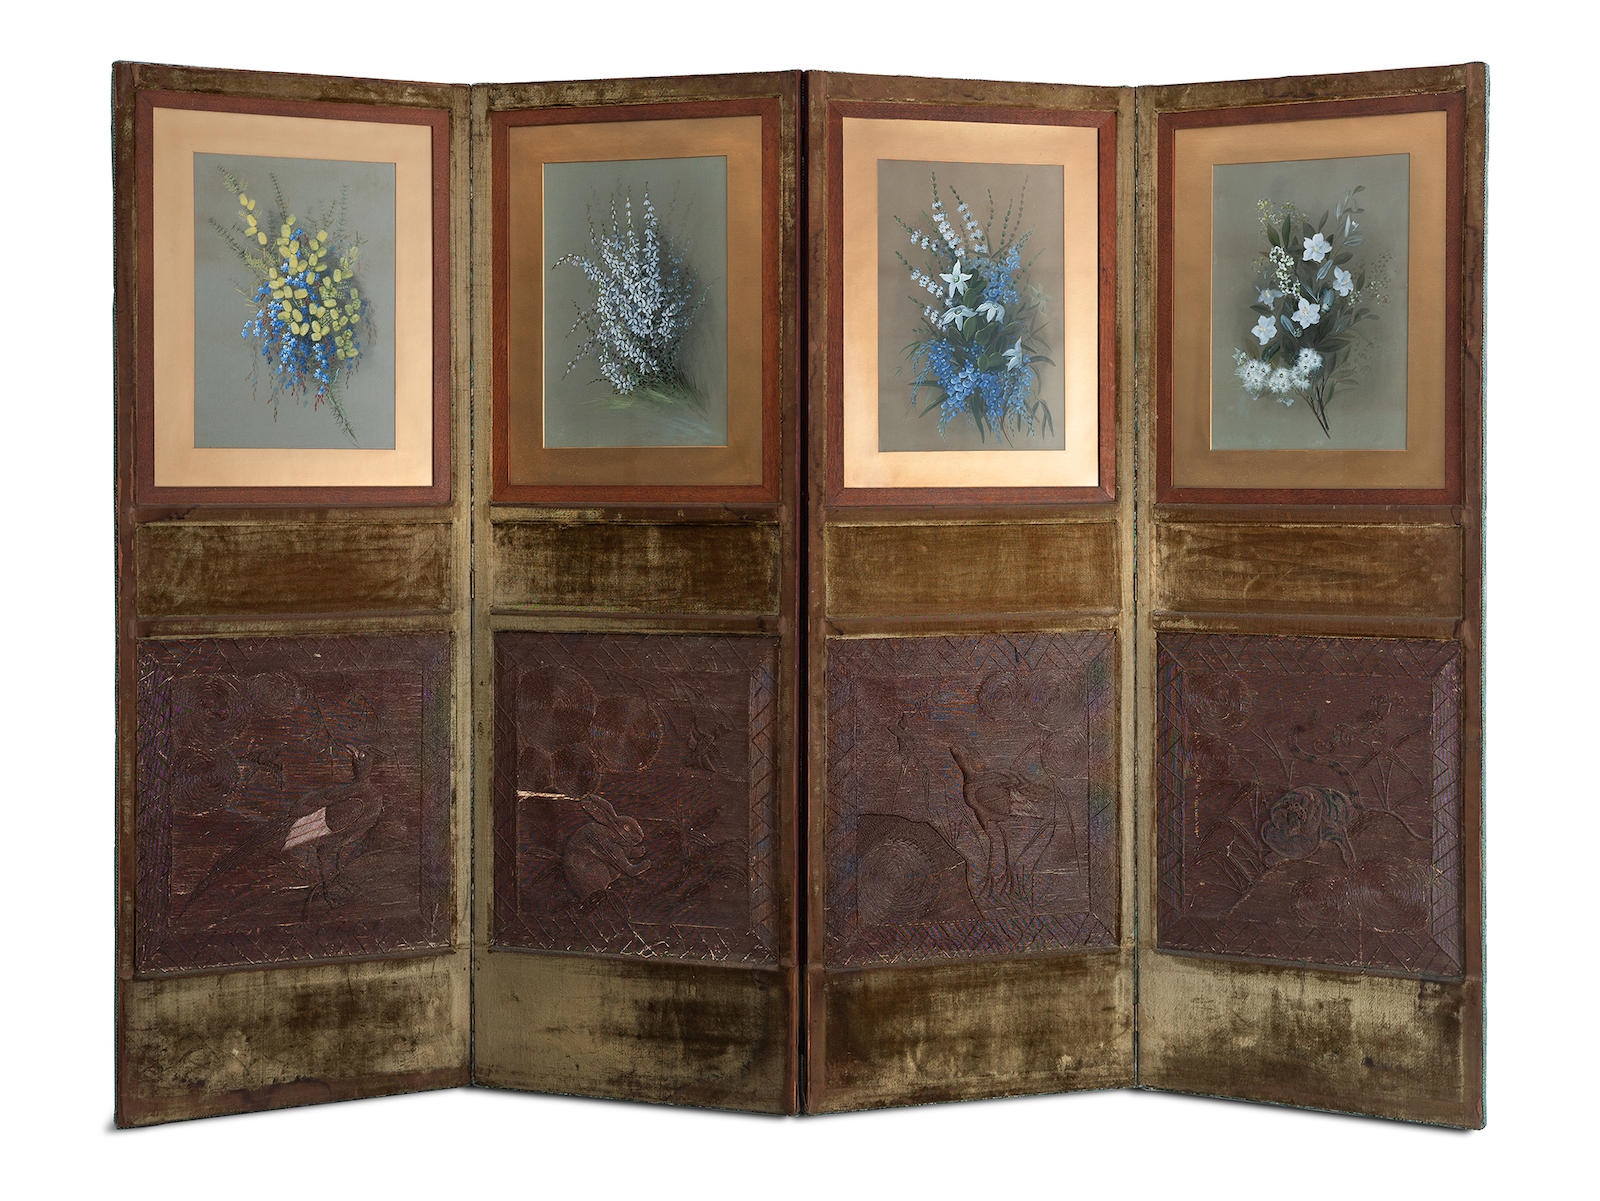 Decorated Screen with Wildflowers by Marian Ellis Rowan, circa1880